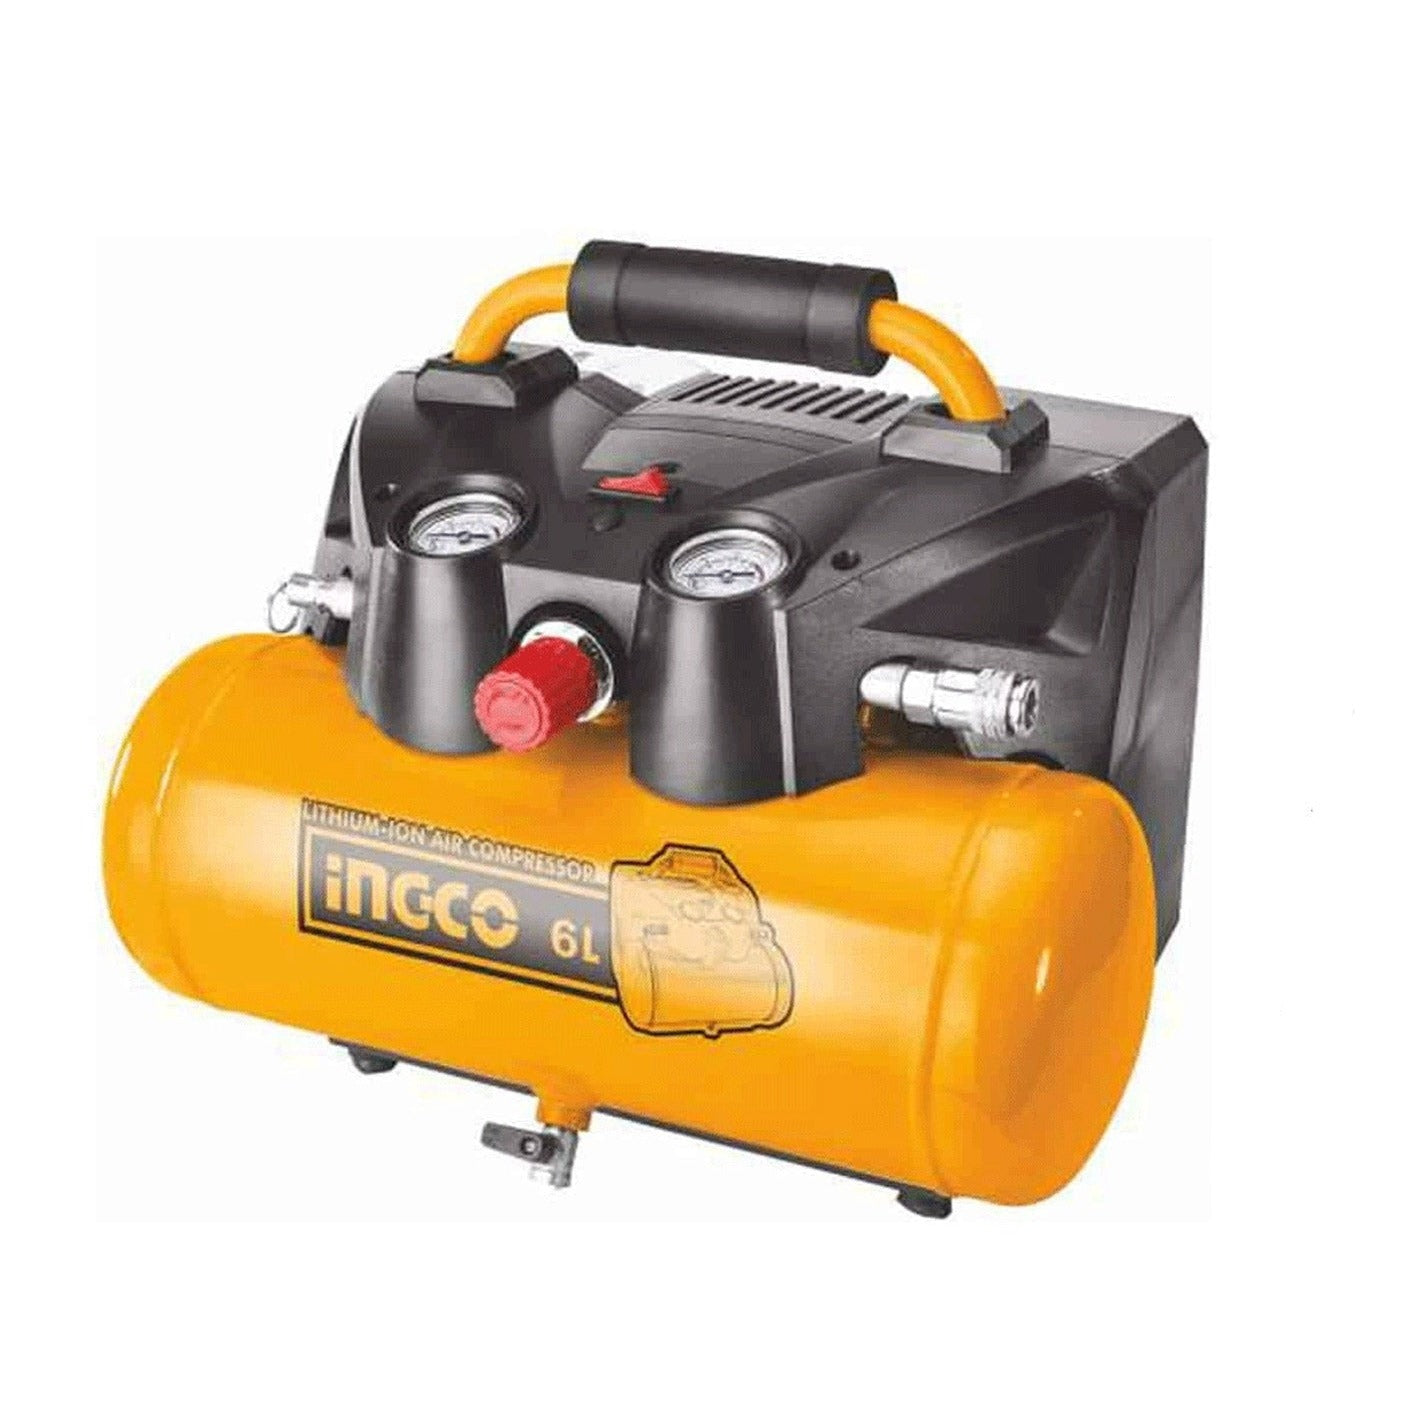 Ingco Air Compressor 3.0HP 50L - AC300508 | Supply Master | Accra, Ghana Compressor & Air Tool Accessories Buy Tools hardware Building materials